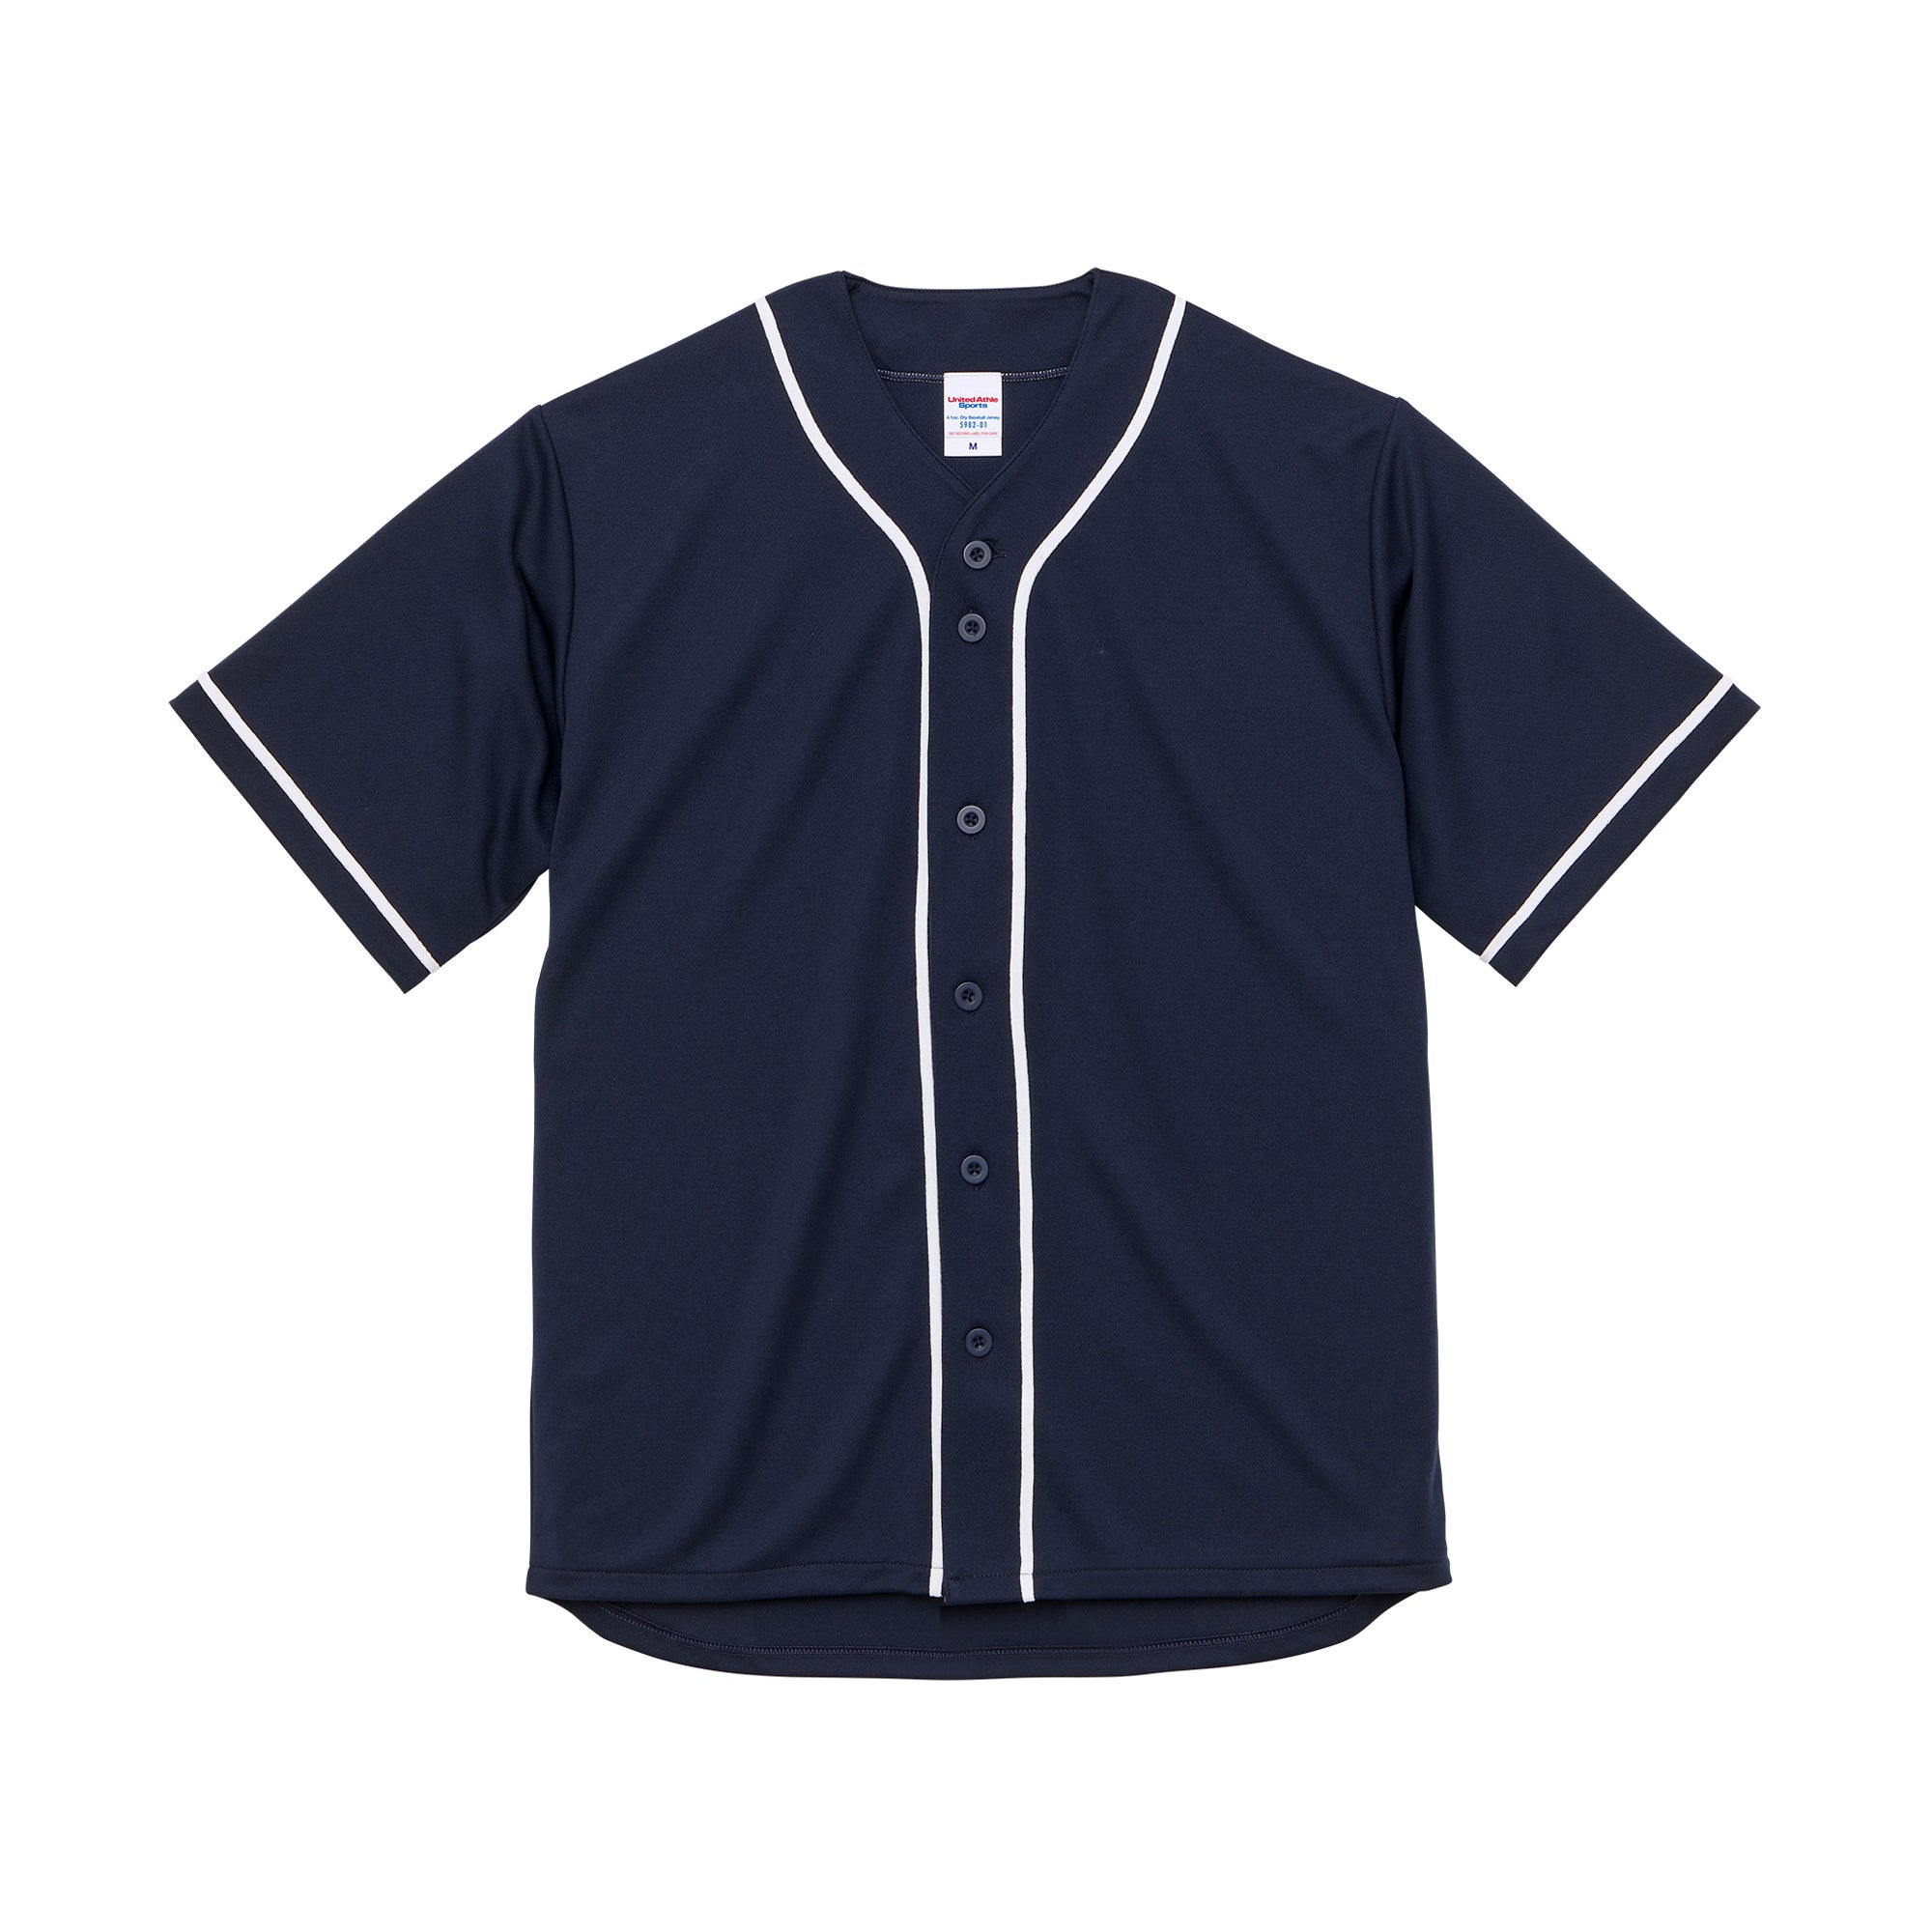 5982 - 4.1 Oz Dry Baseball Shirt - Navy/White x 1